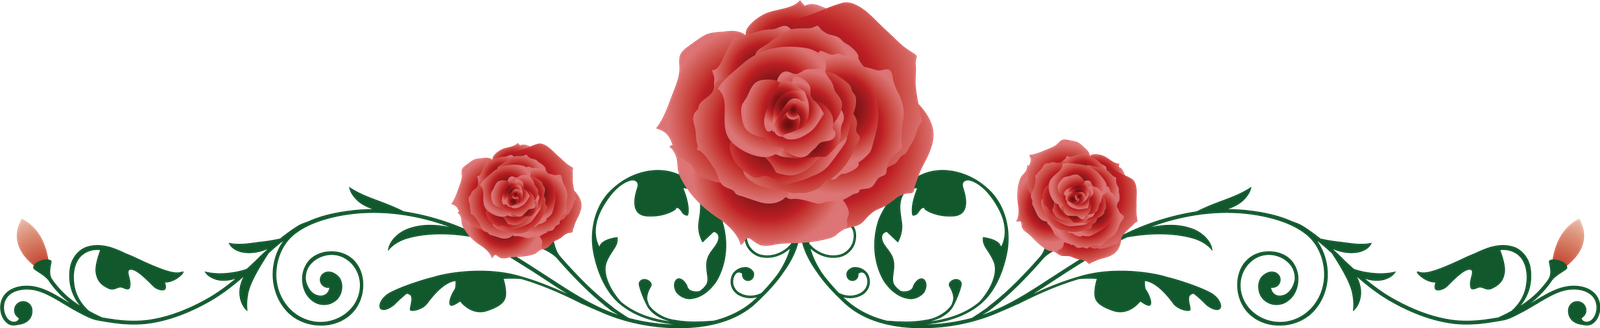 Kwiaty Clipart - Rose Vine Border (1600x328)